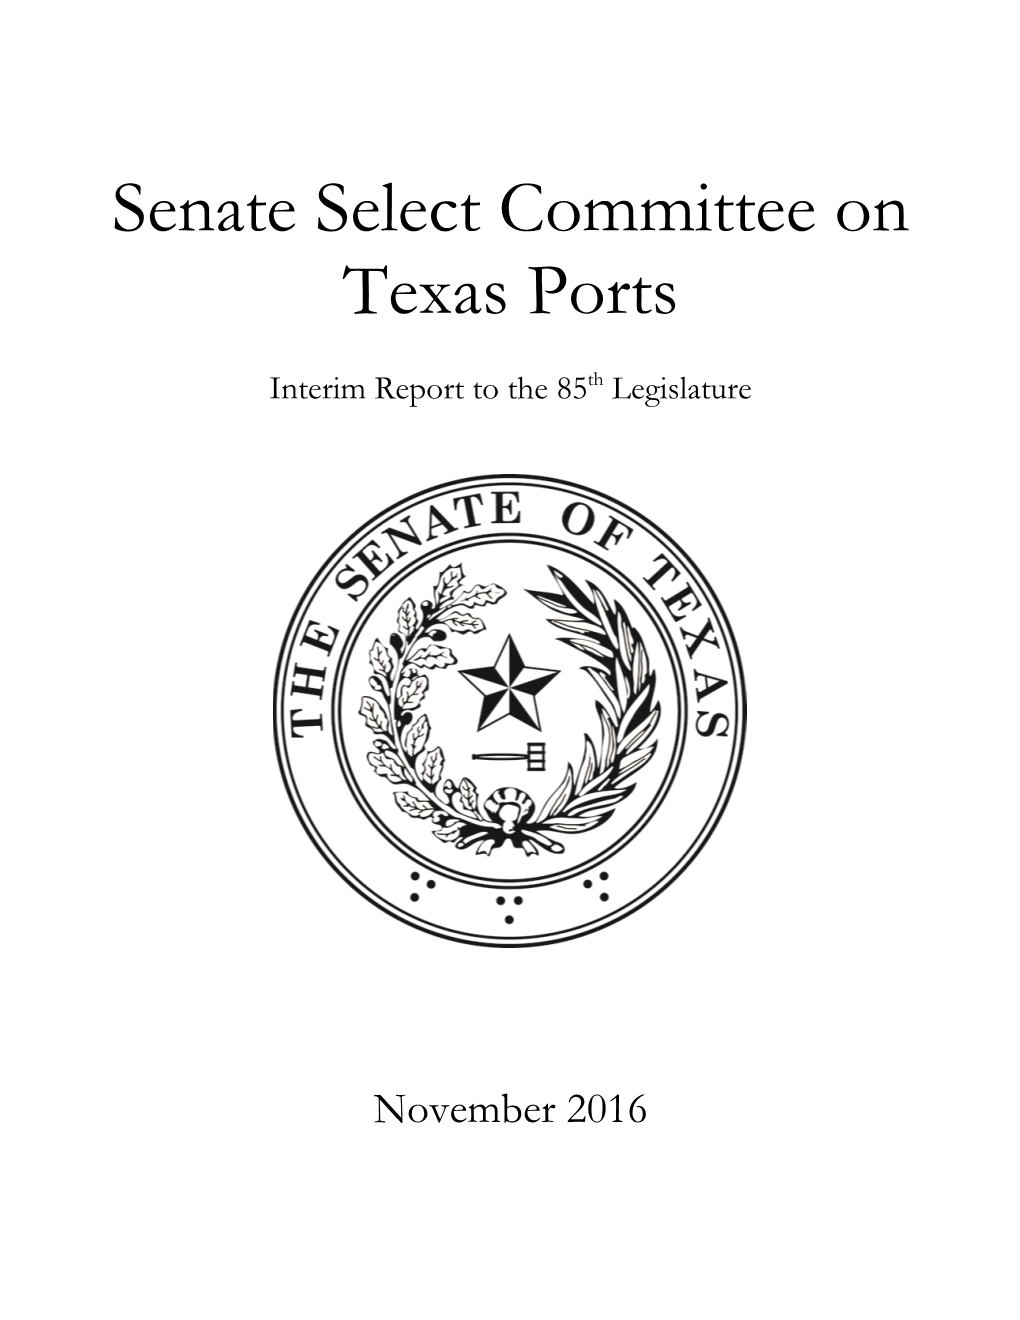 Senate Select Committee on Texas Ports